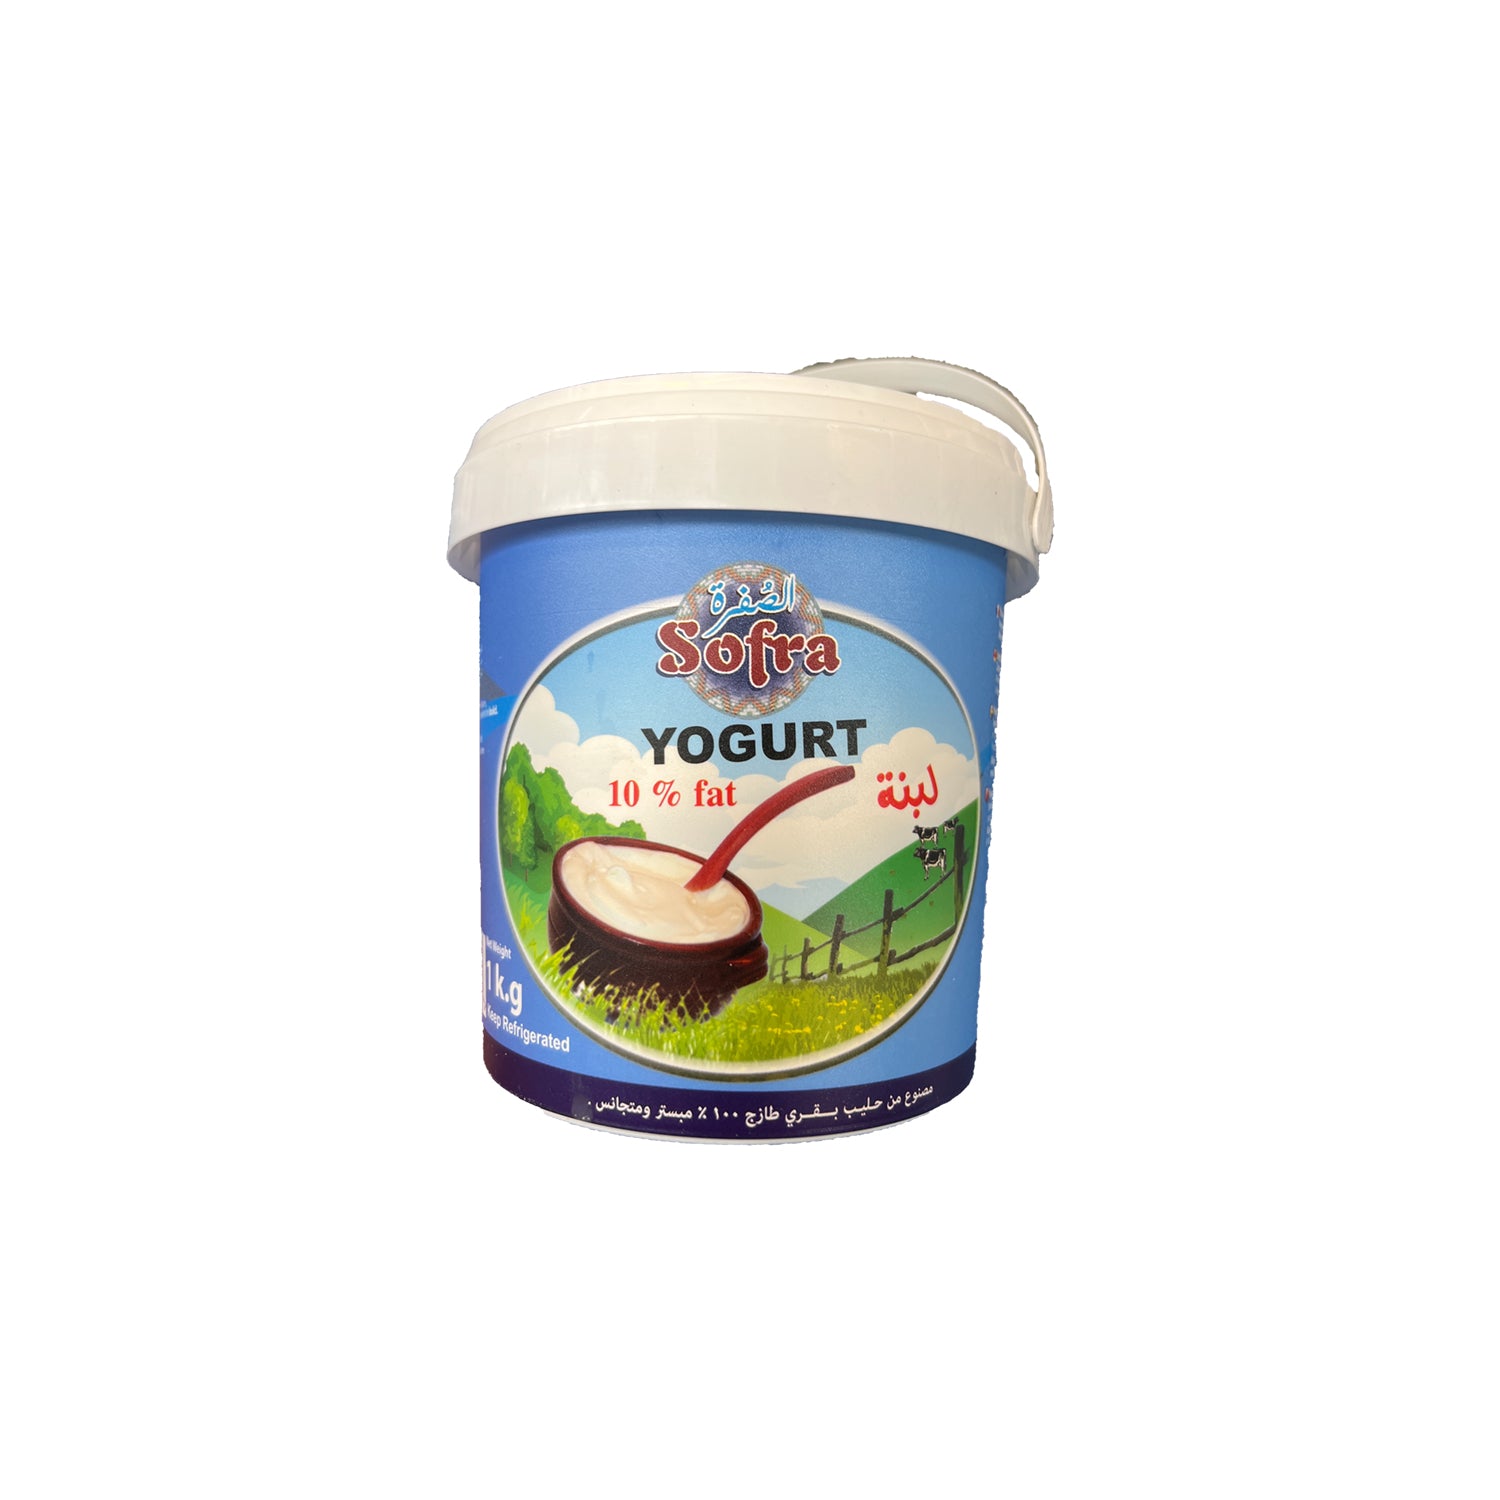 Sofra Yogurt 10% Fat 1kg